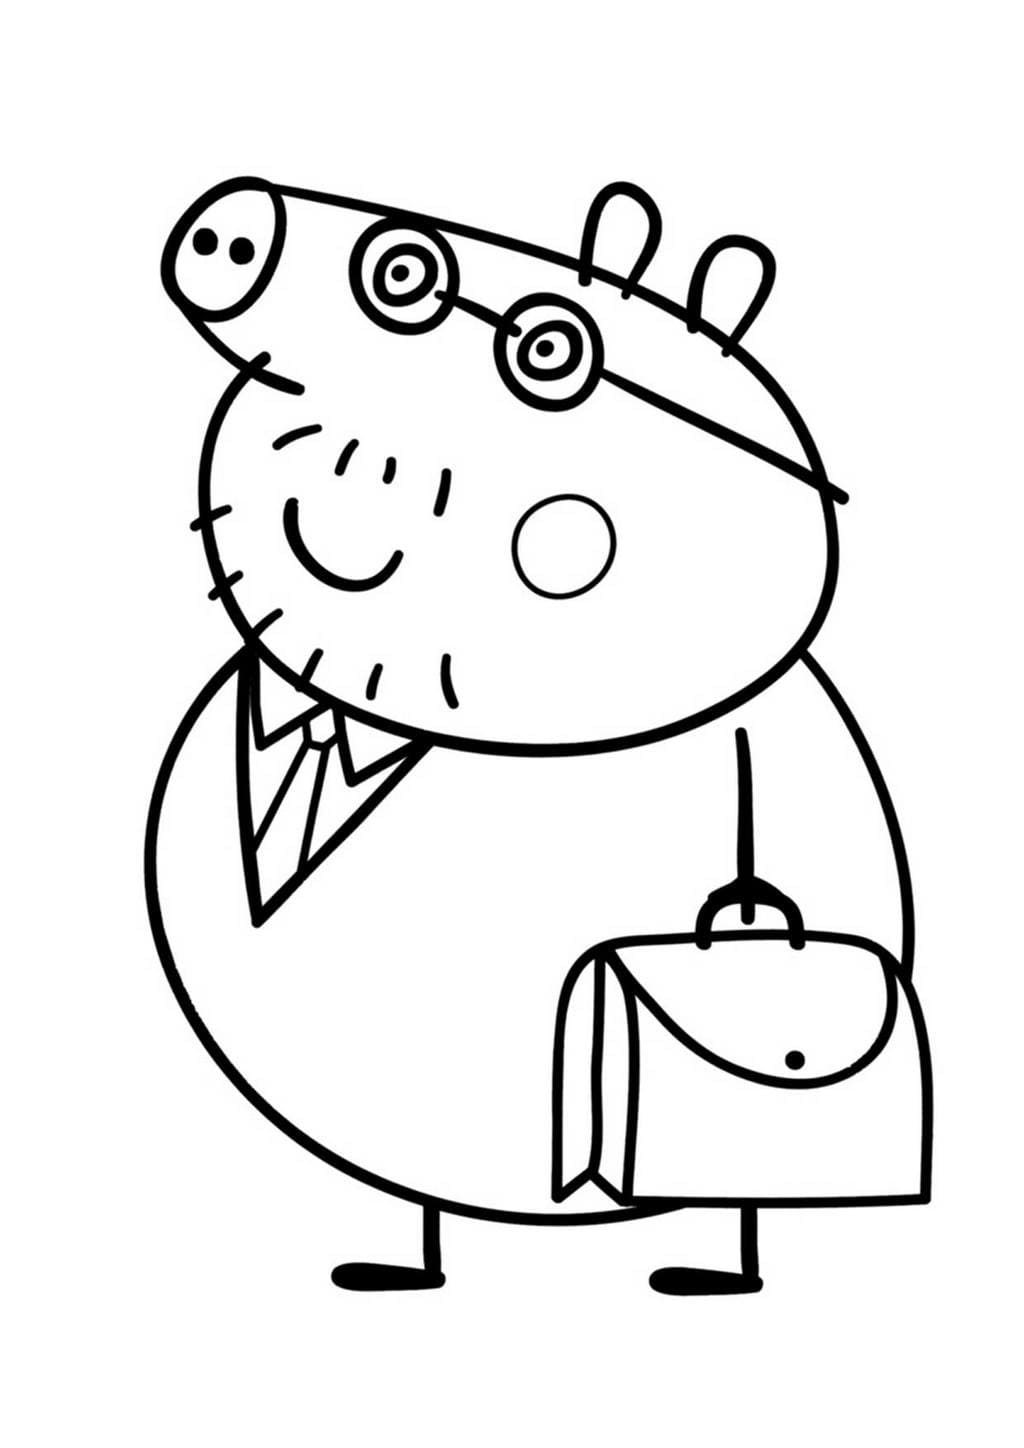 Dibujos de Peppa Pig para Colorear